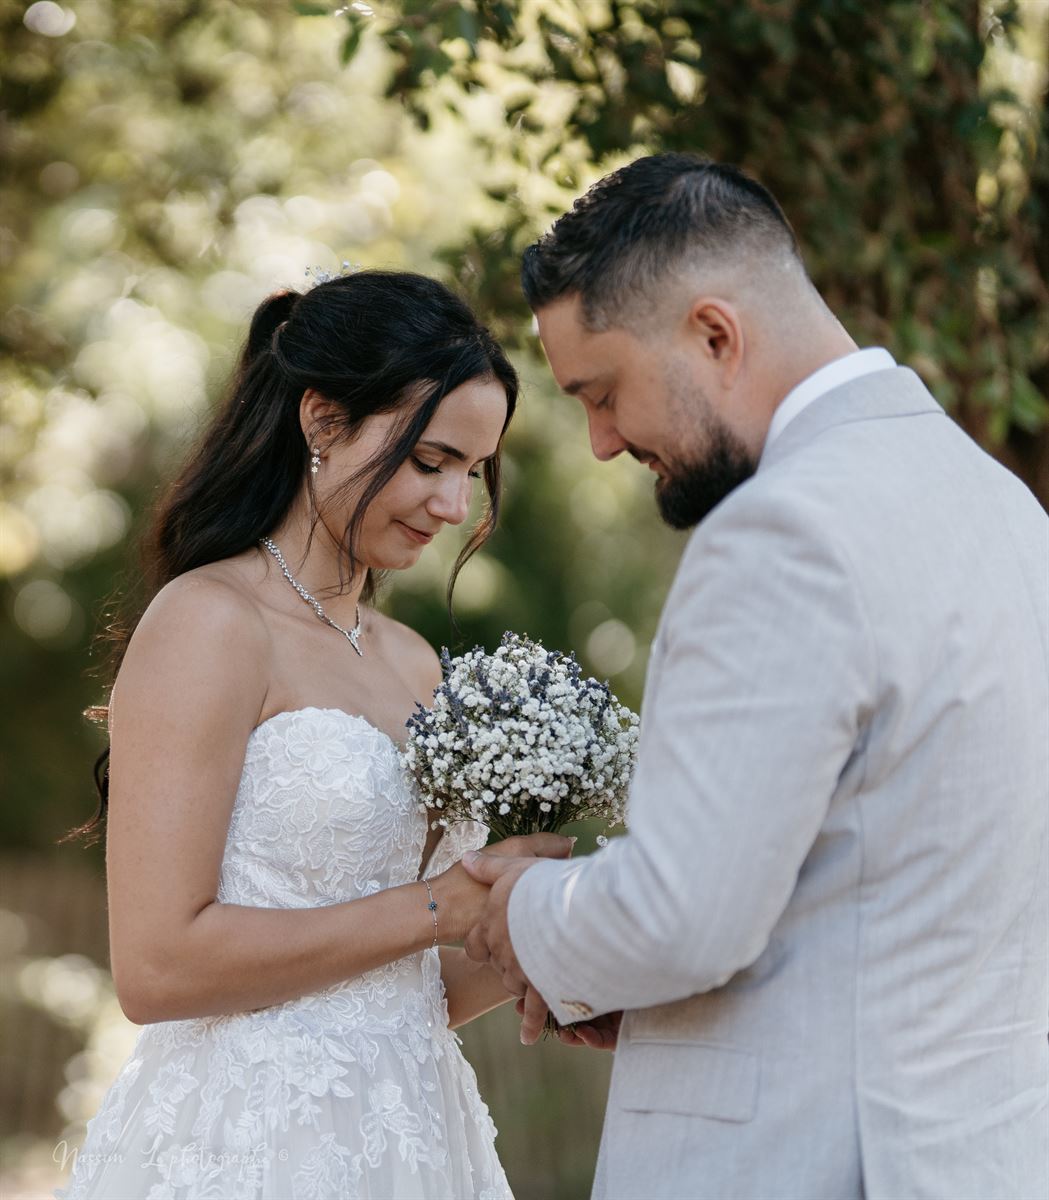 Wedding Photographer Aix en Provence: Capturing Love's Embrace 7